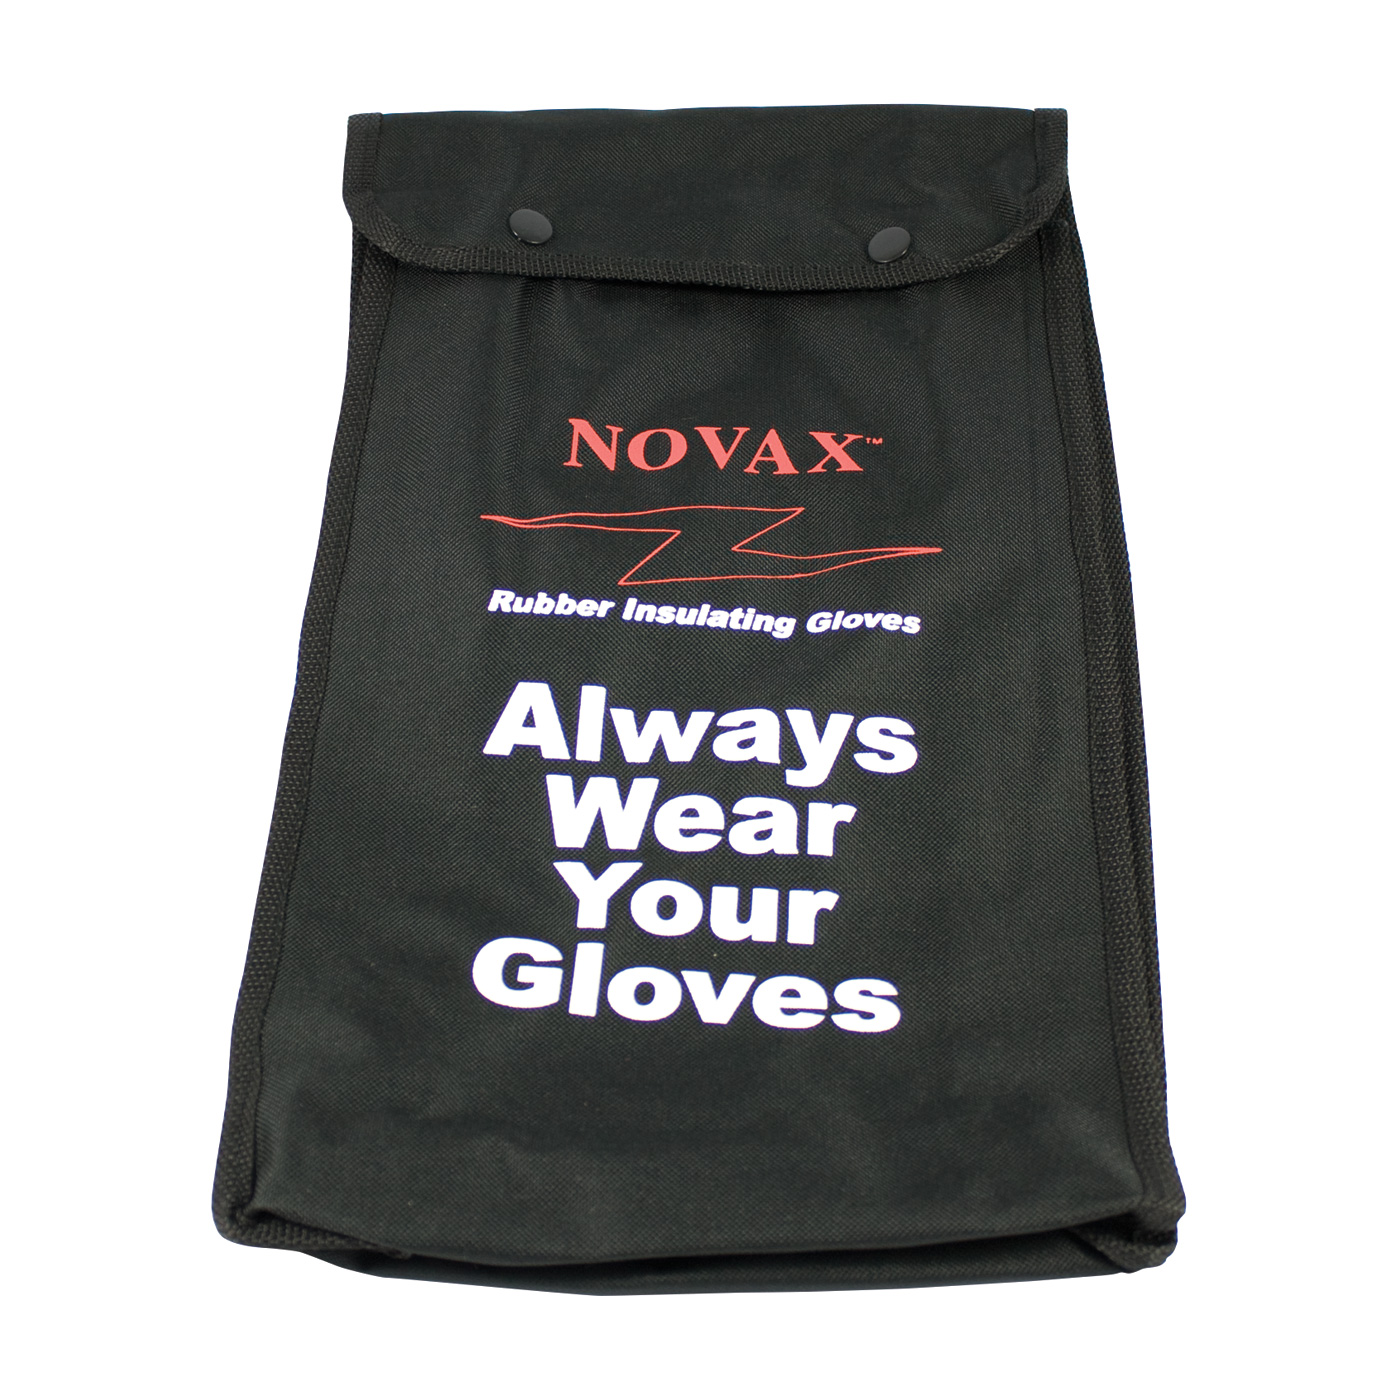 Nylon Protective Glove Bag - Spill Control